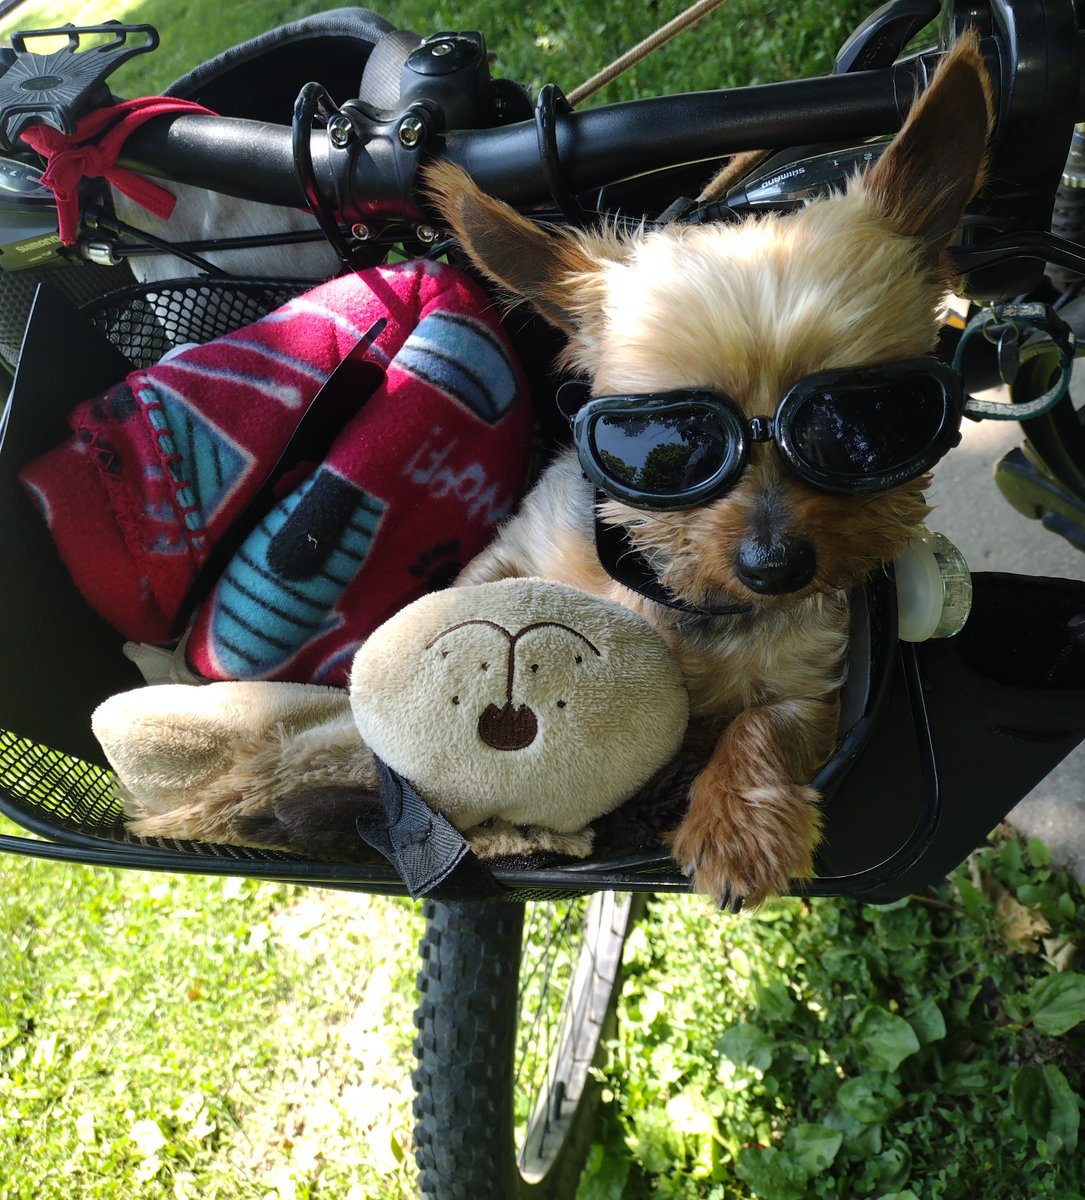 Me 👣
and
Chauncey-Poo 🐾
went on a bike ride.
#SundayFunday
#SundayAfternoon
#SundayMotivation 
We're Welcome! 🌞